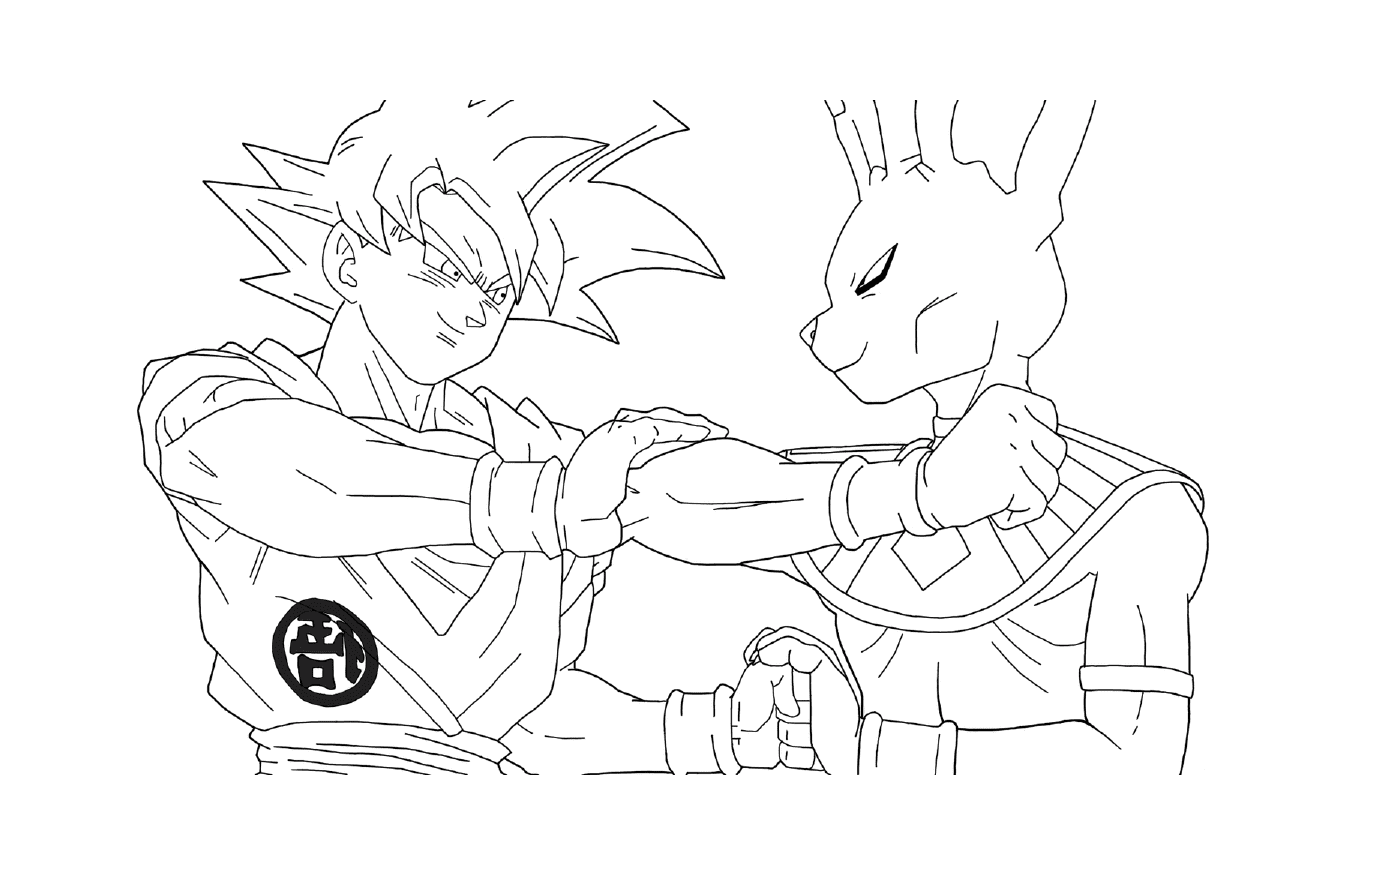  Beerus vs Goku Super Saiyan Gold de DBZ 